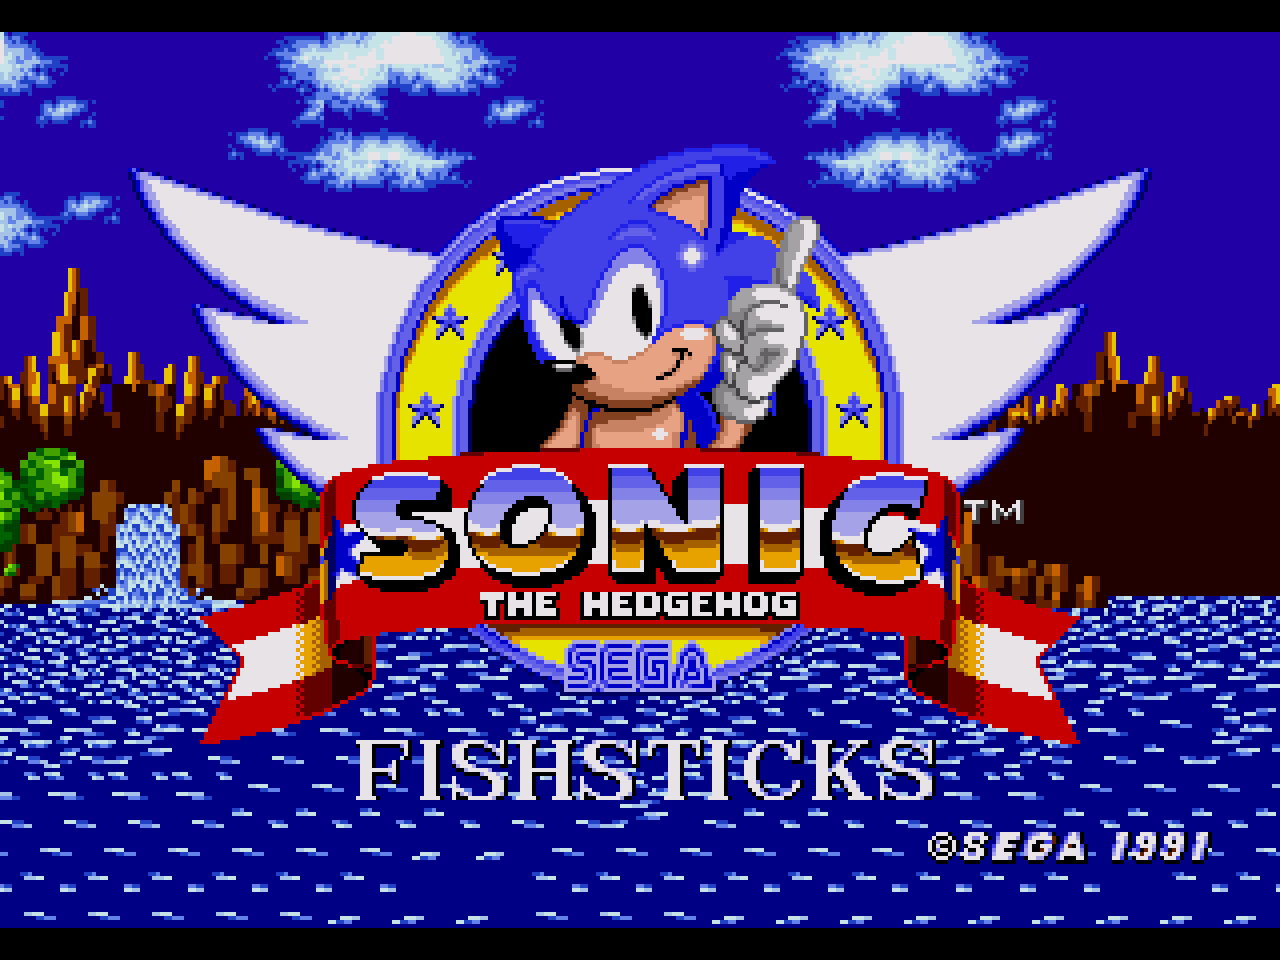 Sonic 1: Fishsticks